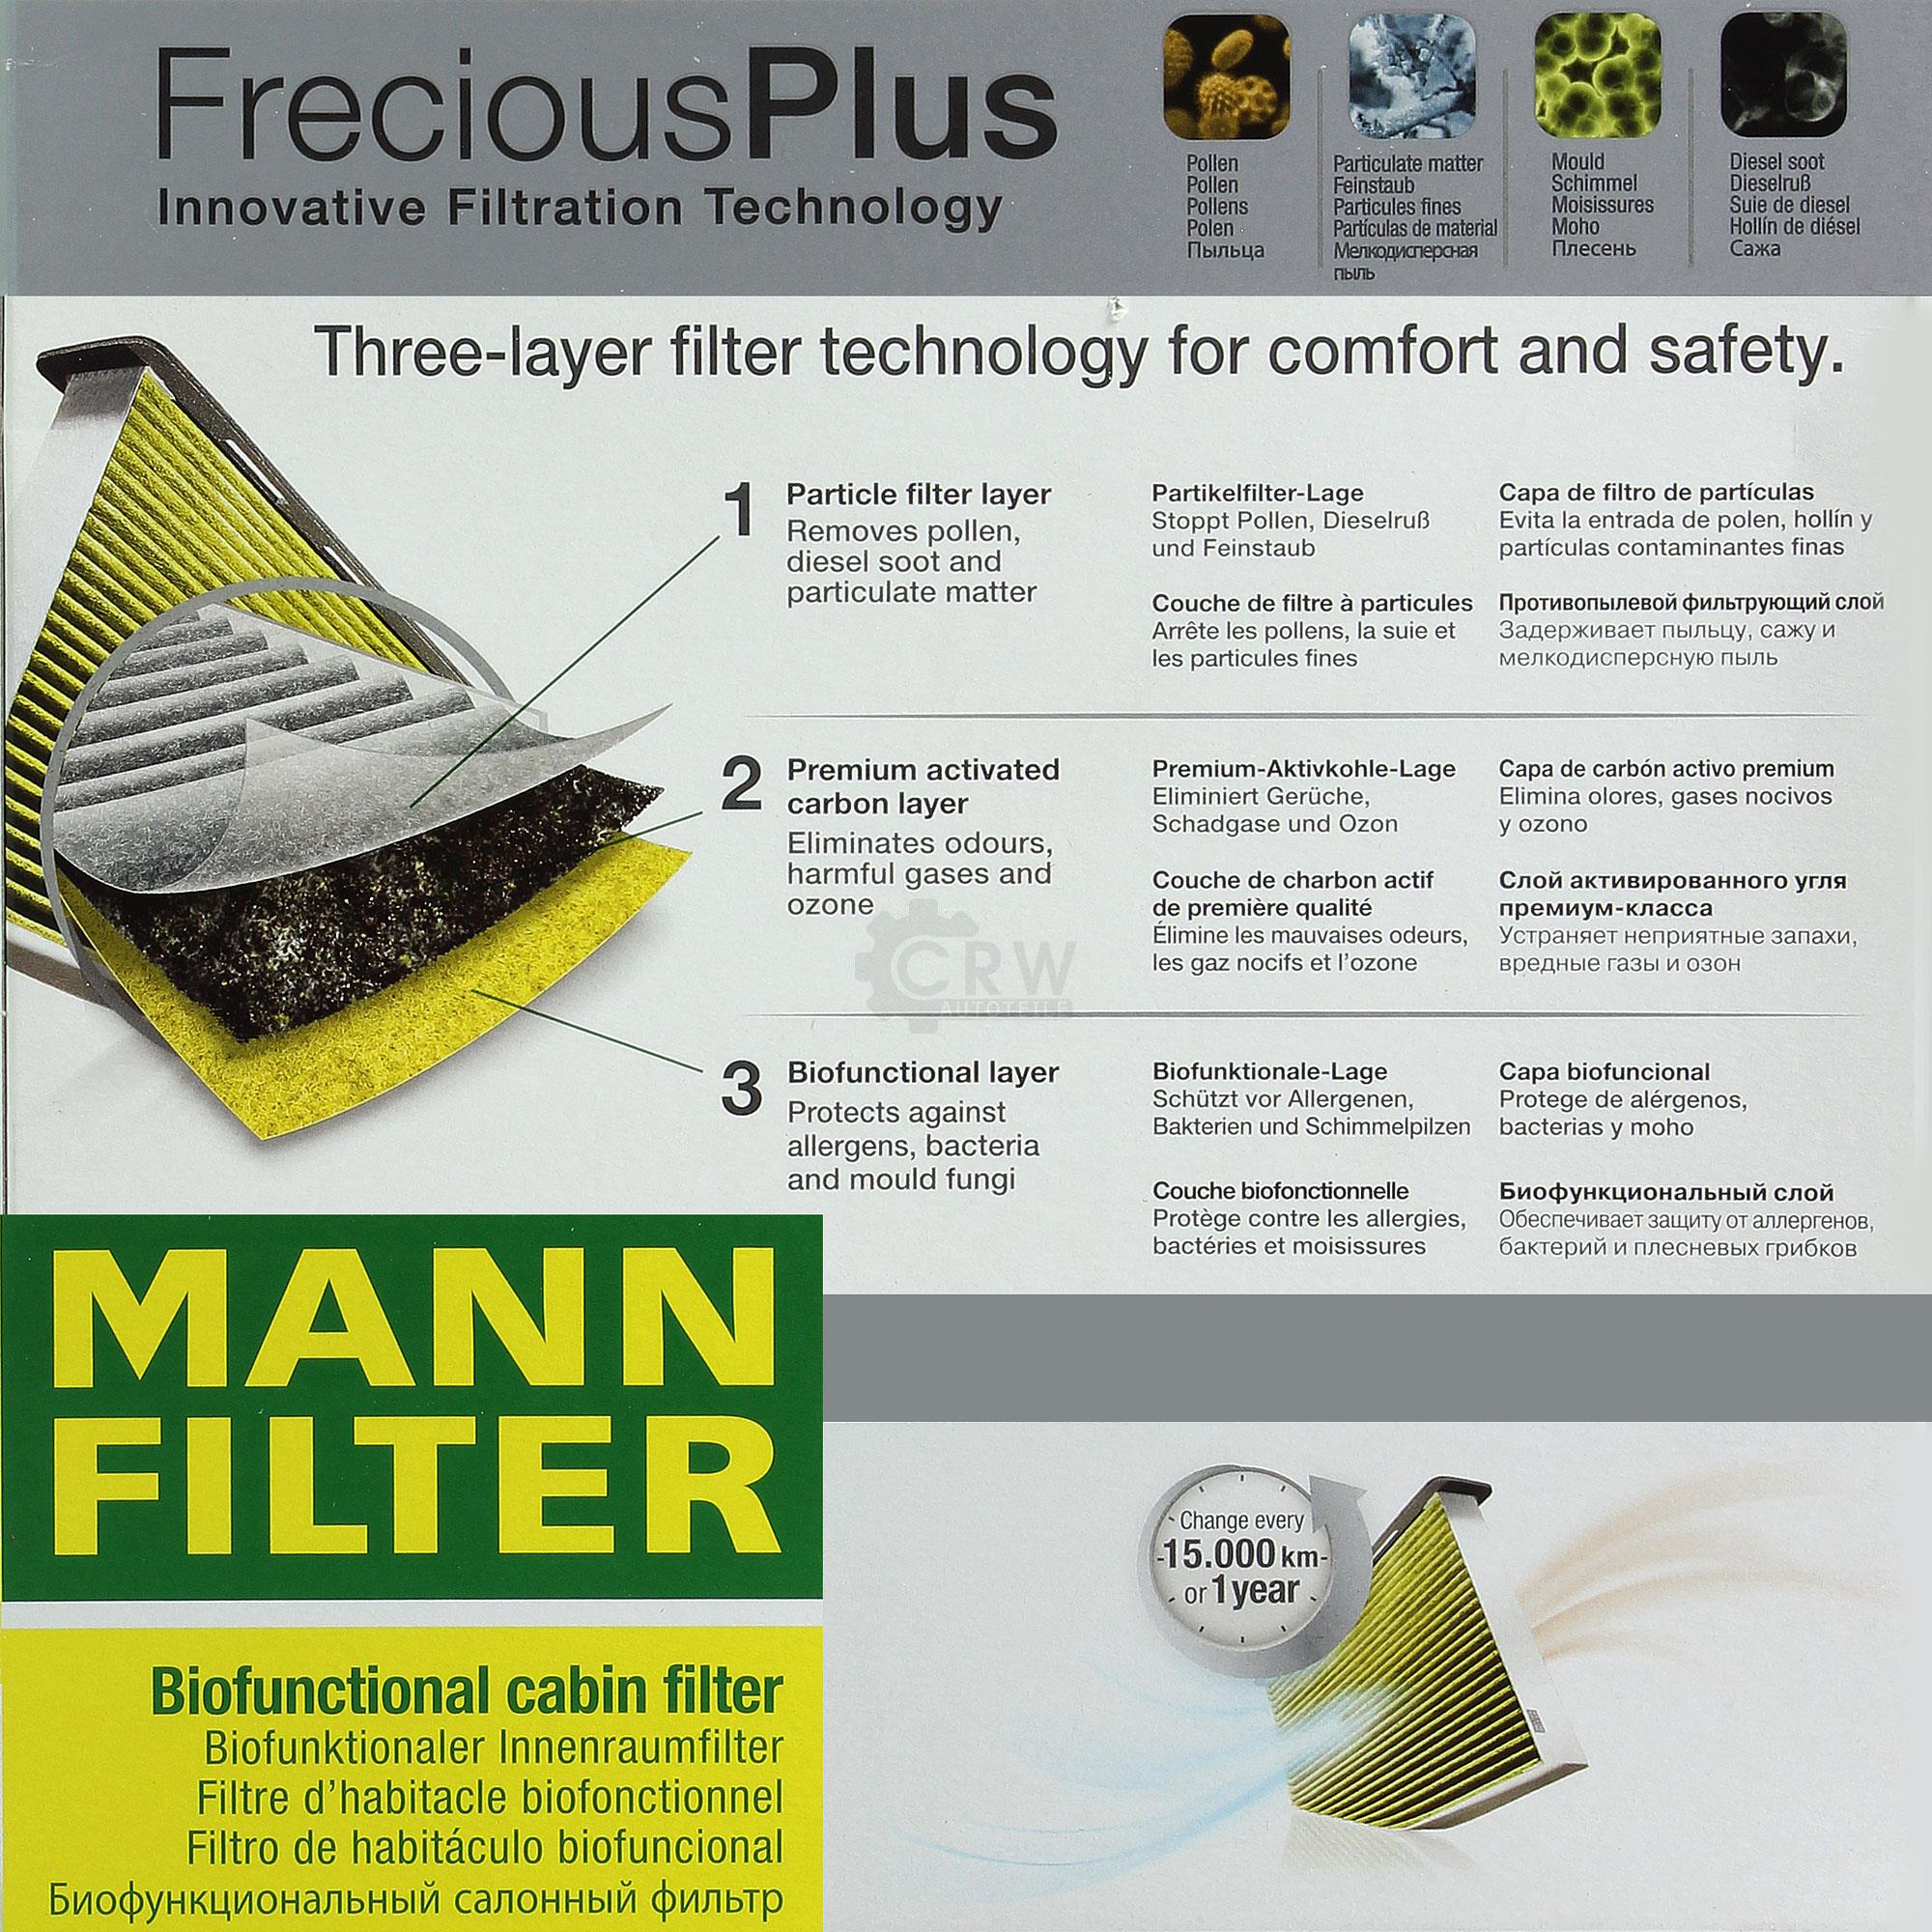 MANN-Filter Innenraumfilter Biofunctional für Allergiker FP 2641